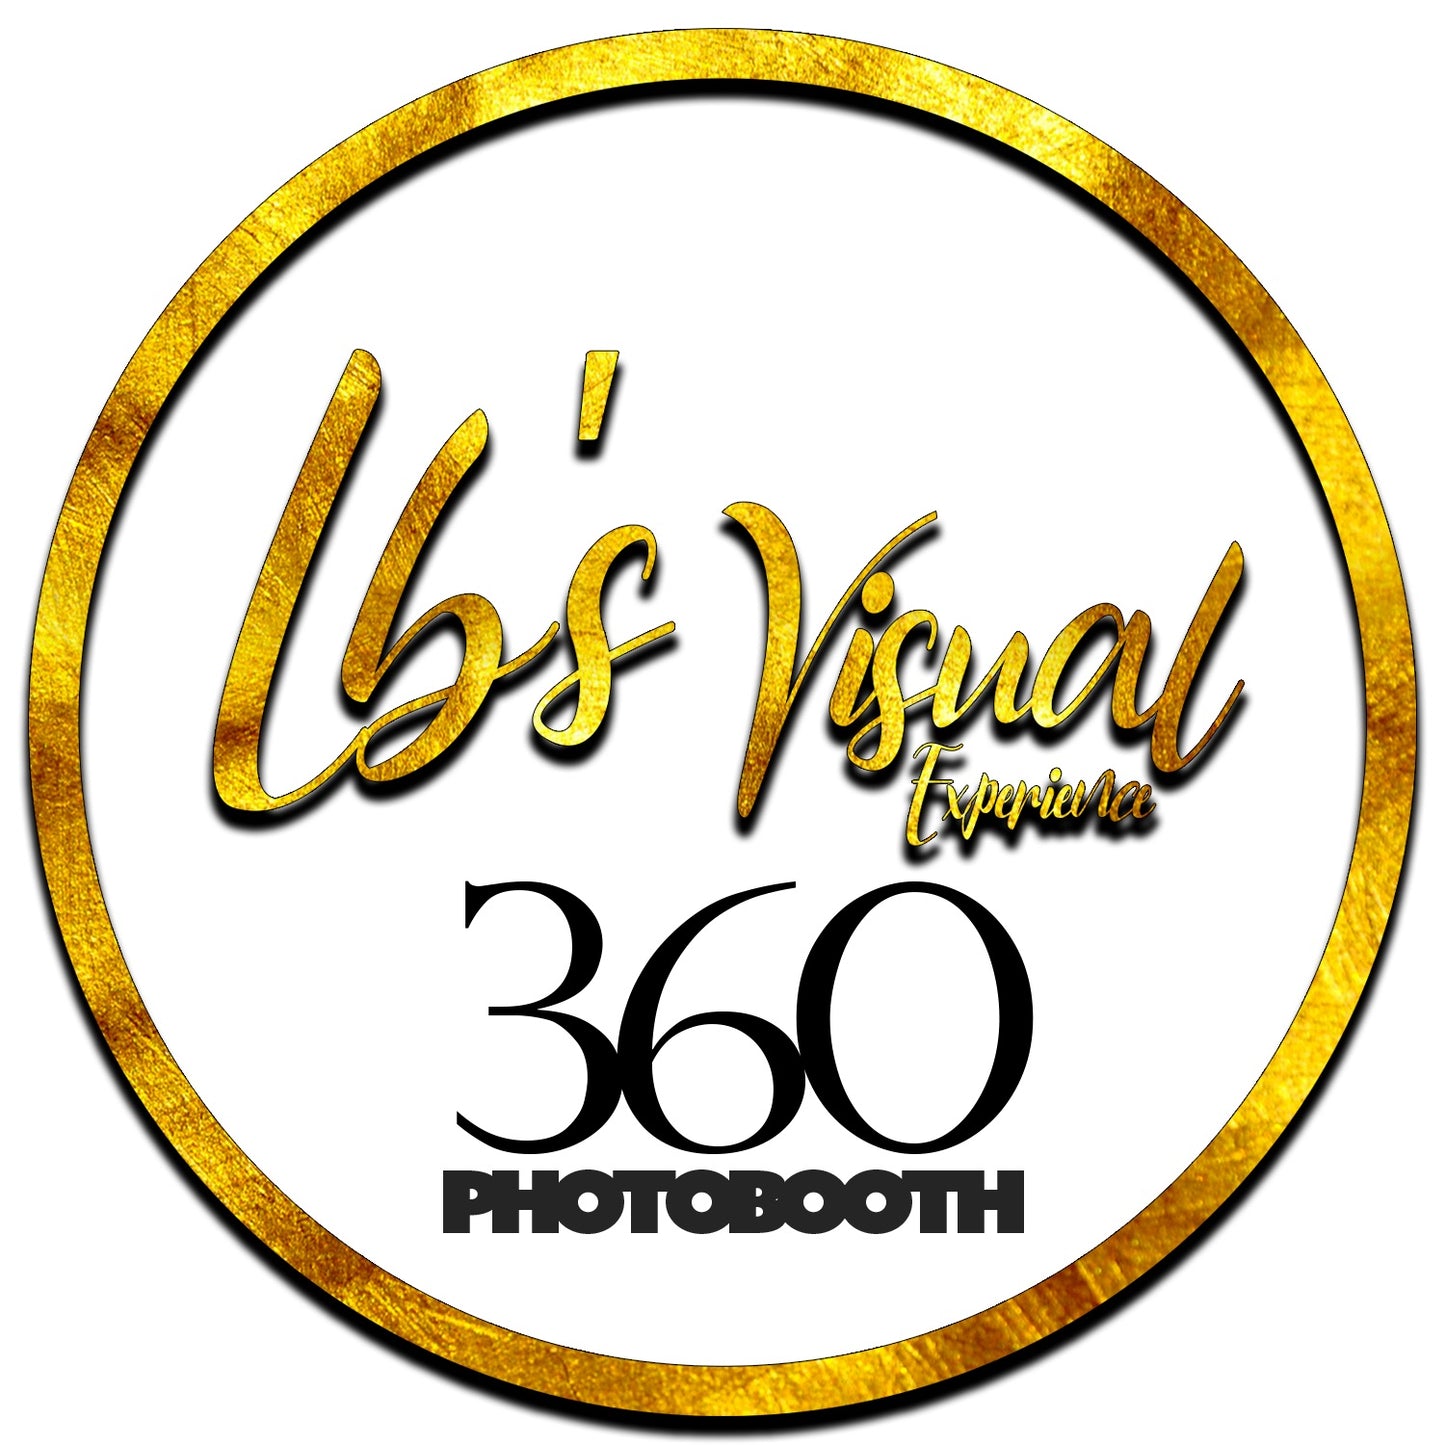 Mr.360 Photobooth Rental & Sales